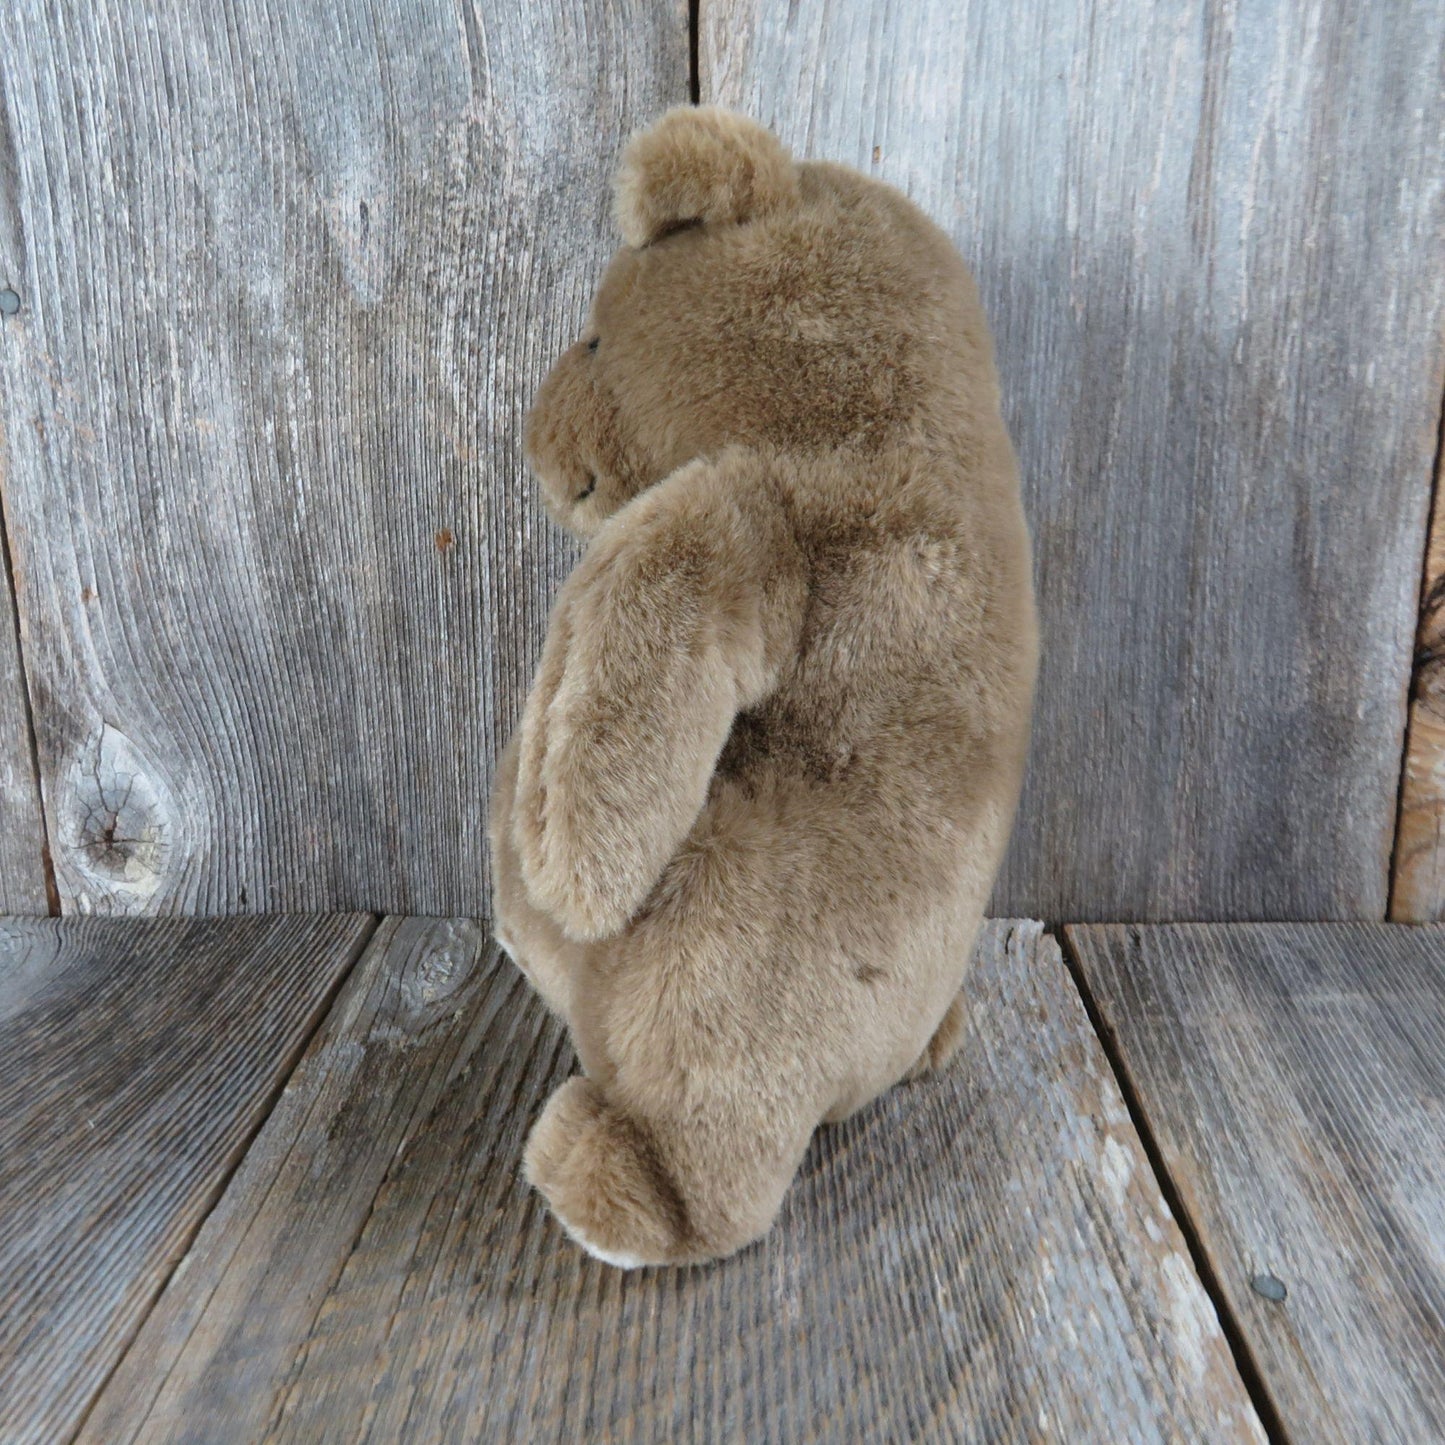 Vintage Teddy Bear Potbelly Plush Sweet Pea Crying Waving Boo Hoo Stuffed Animal 1987